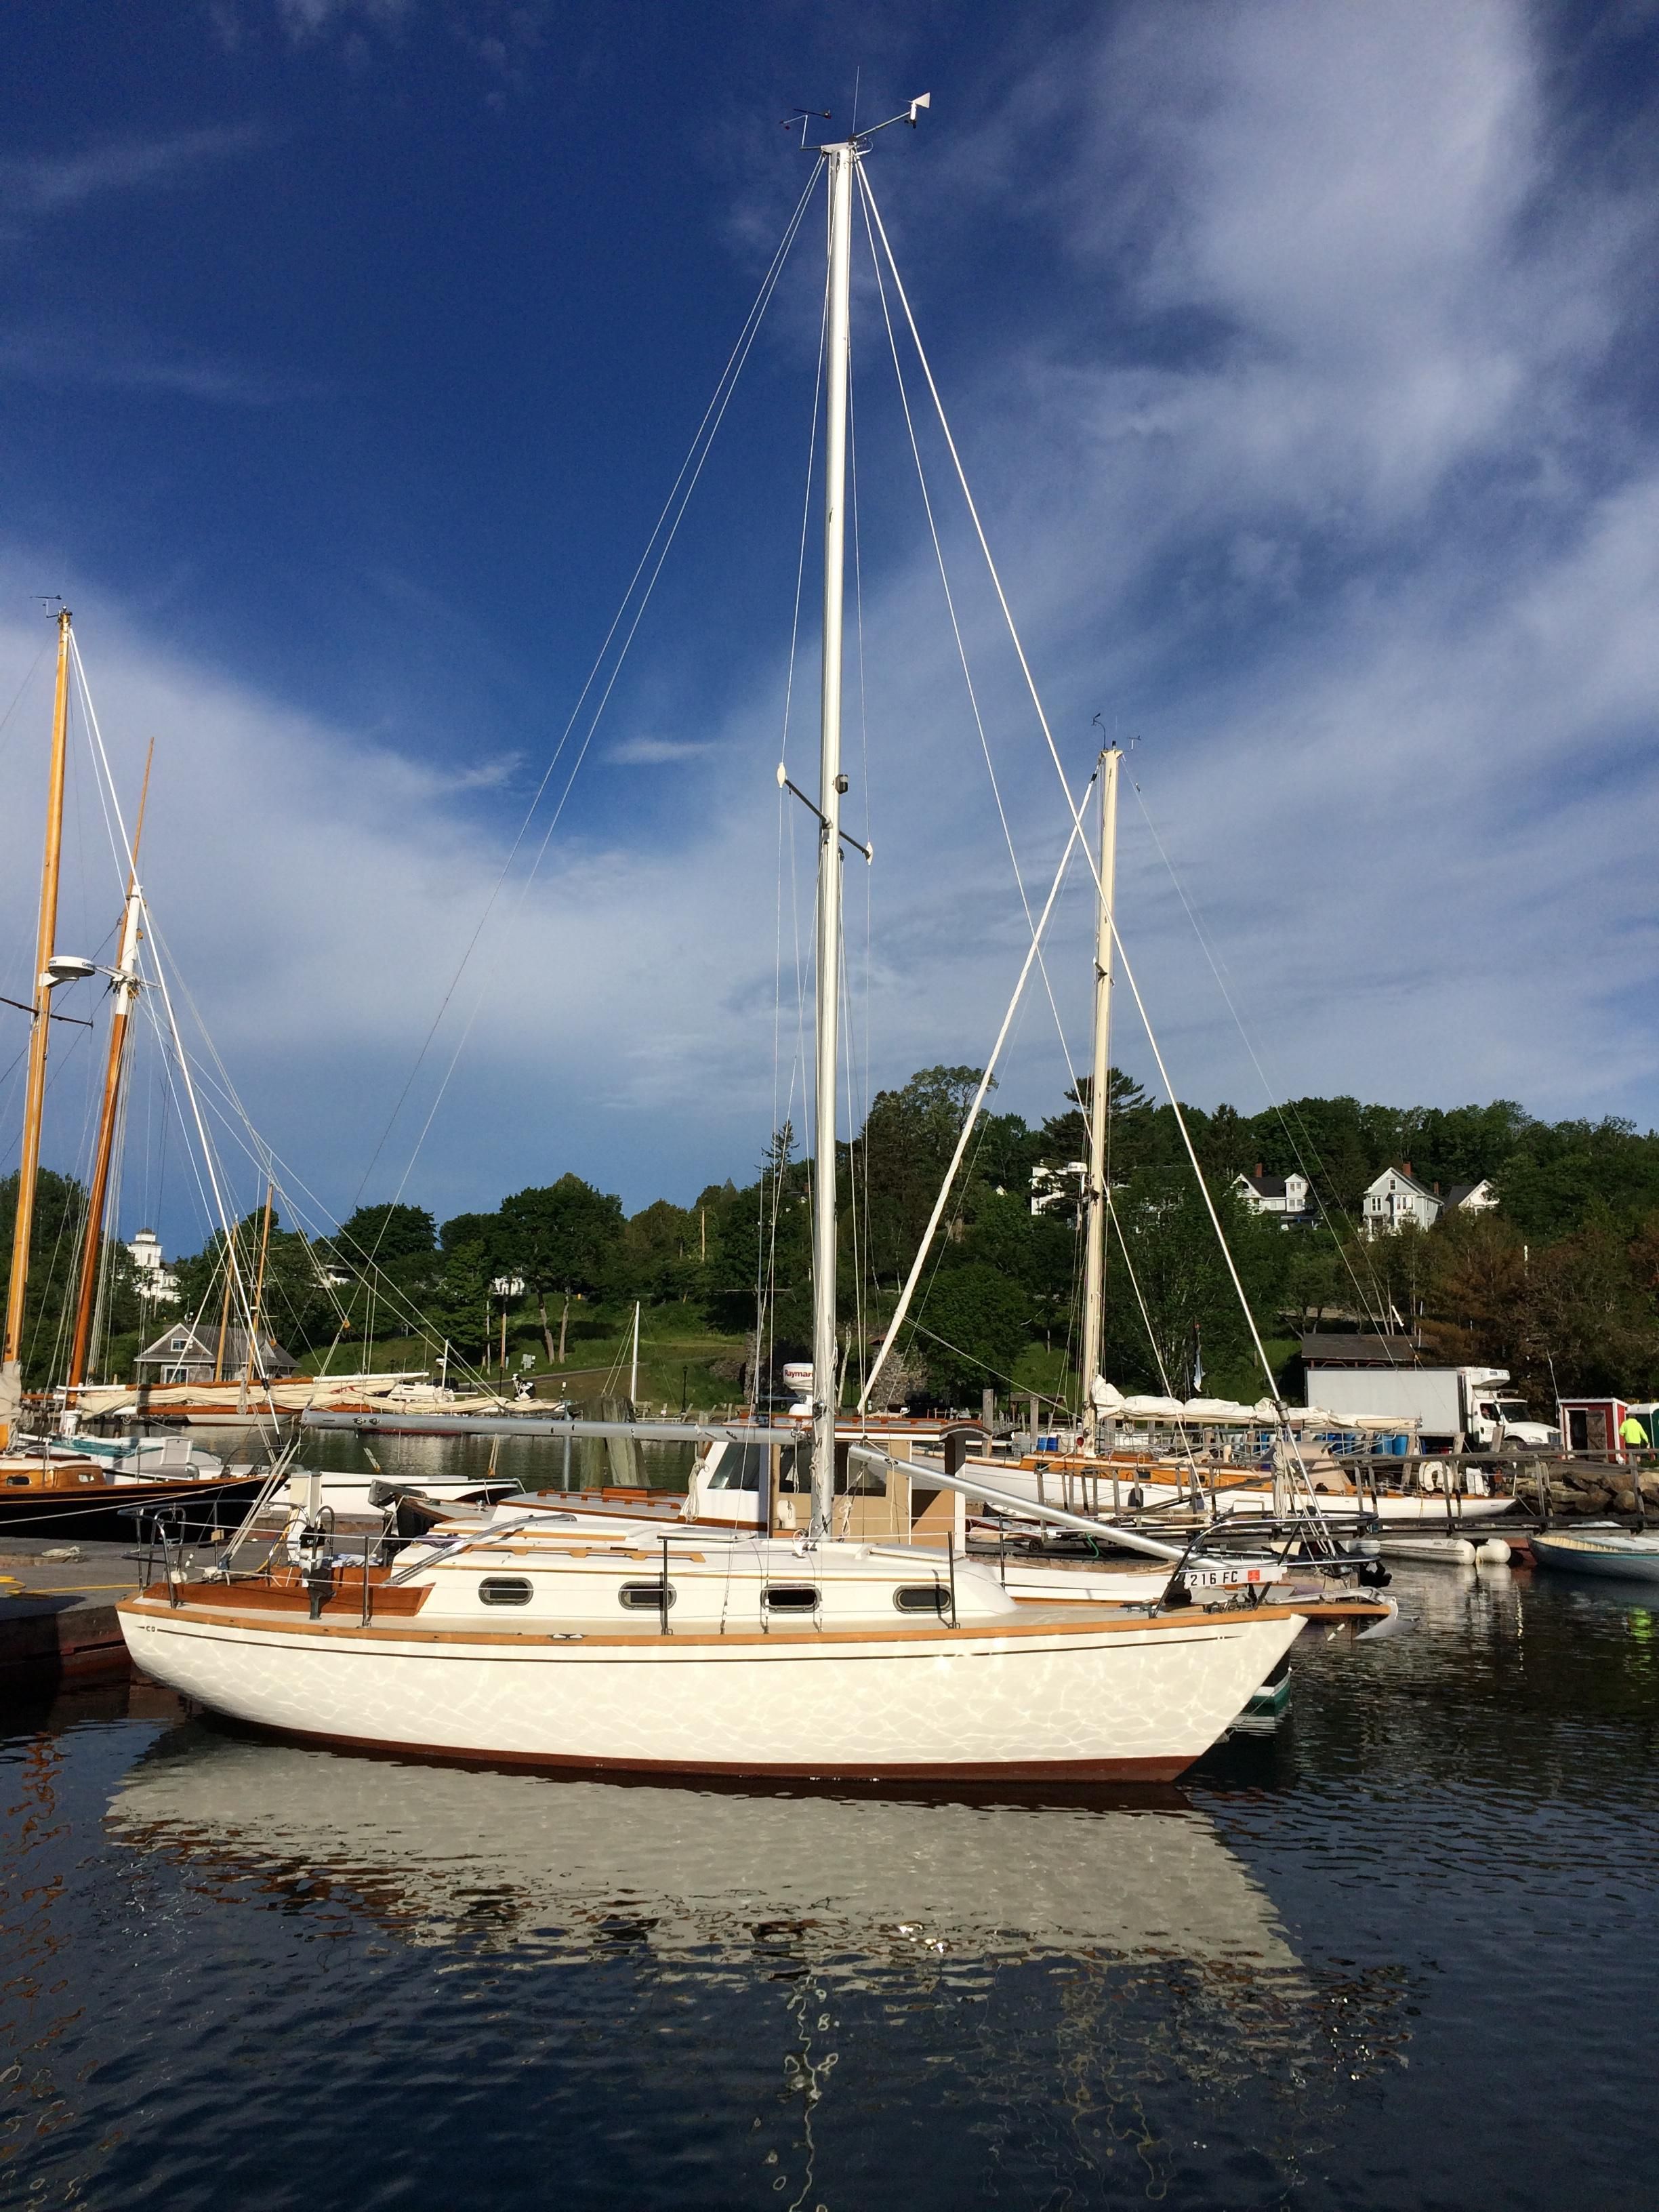 cape dory 28 sailboat for sale